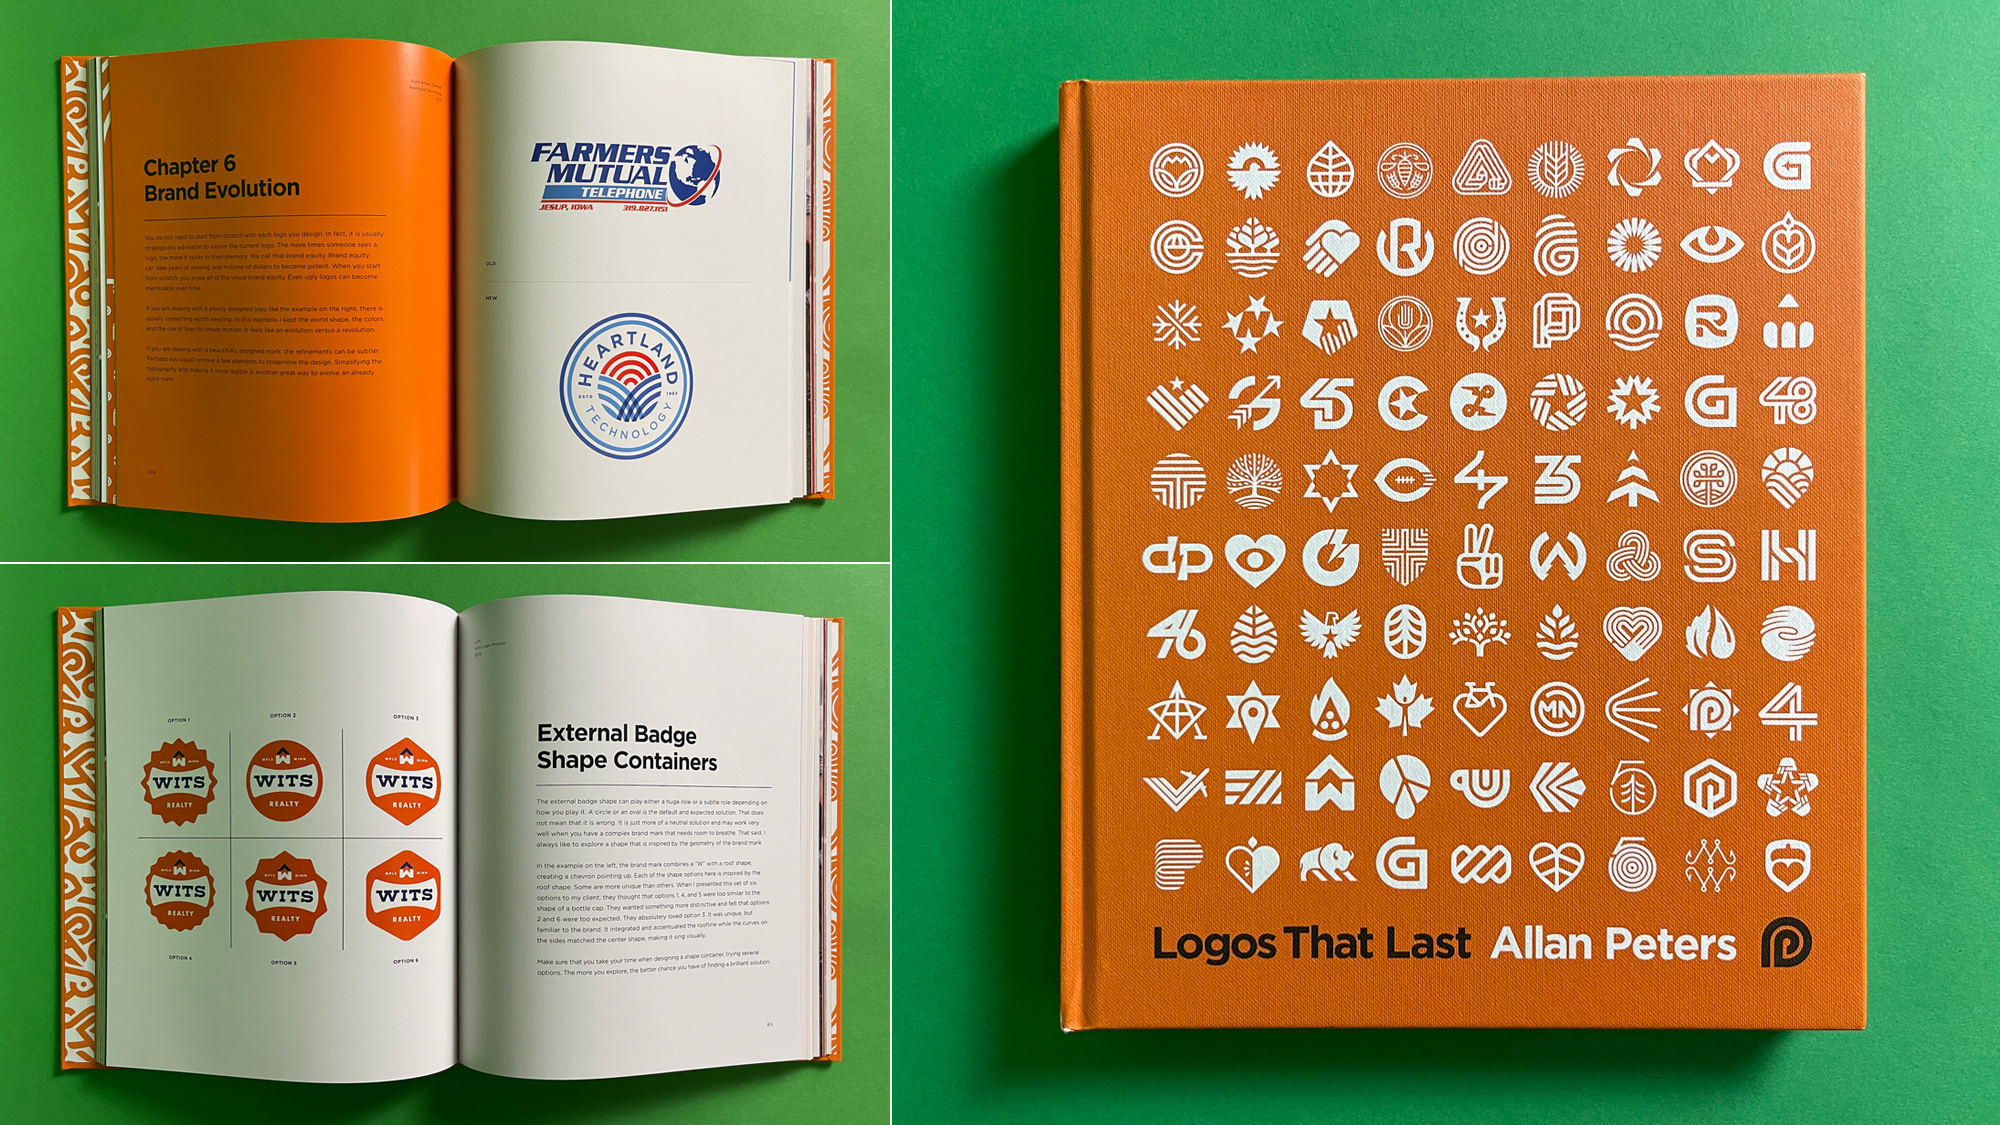 “Logos that Last” Book